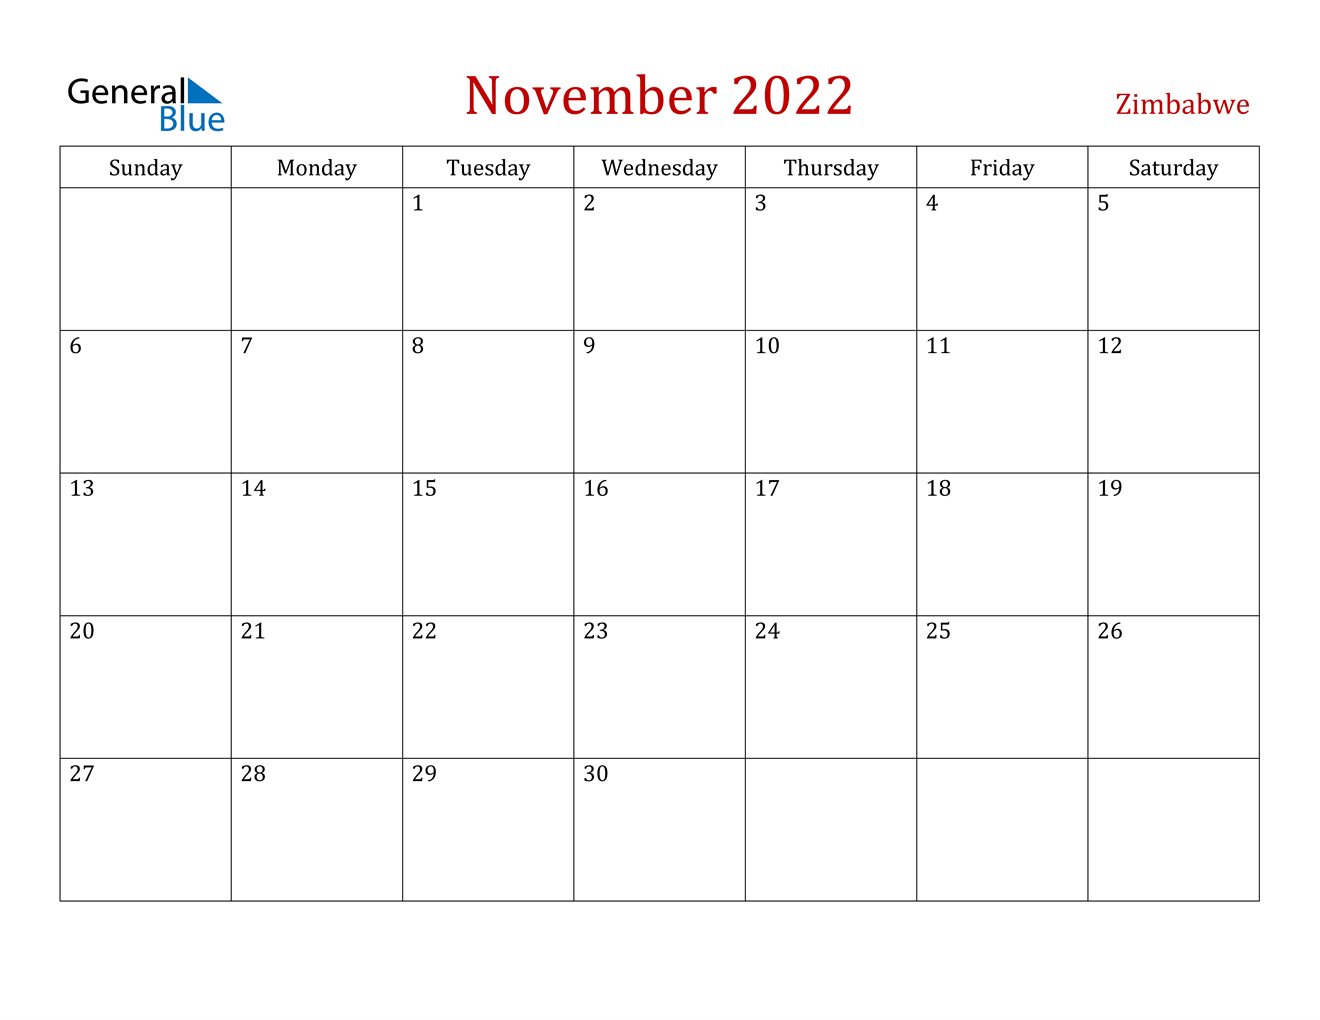 November 2022 Calendar - Zimbabwe